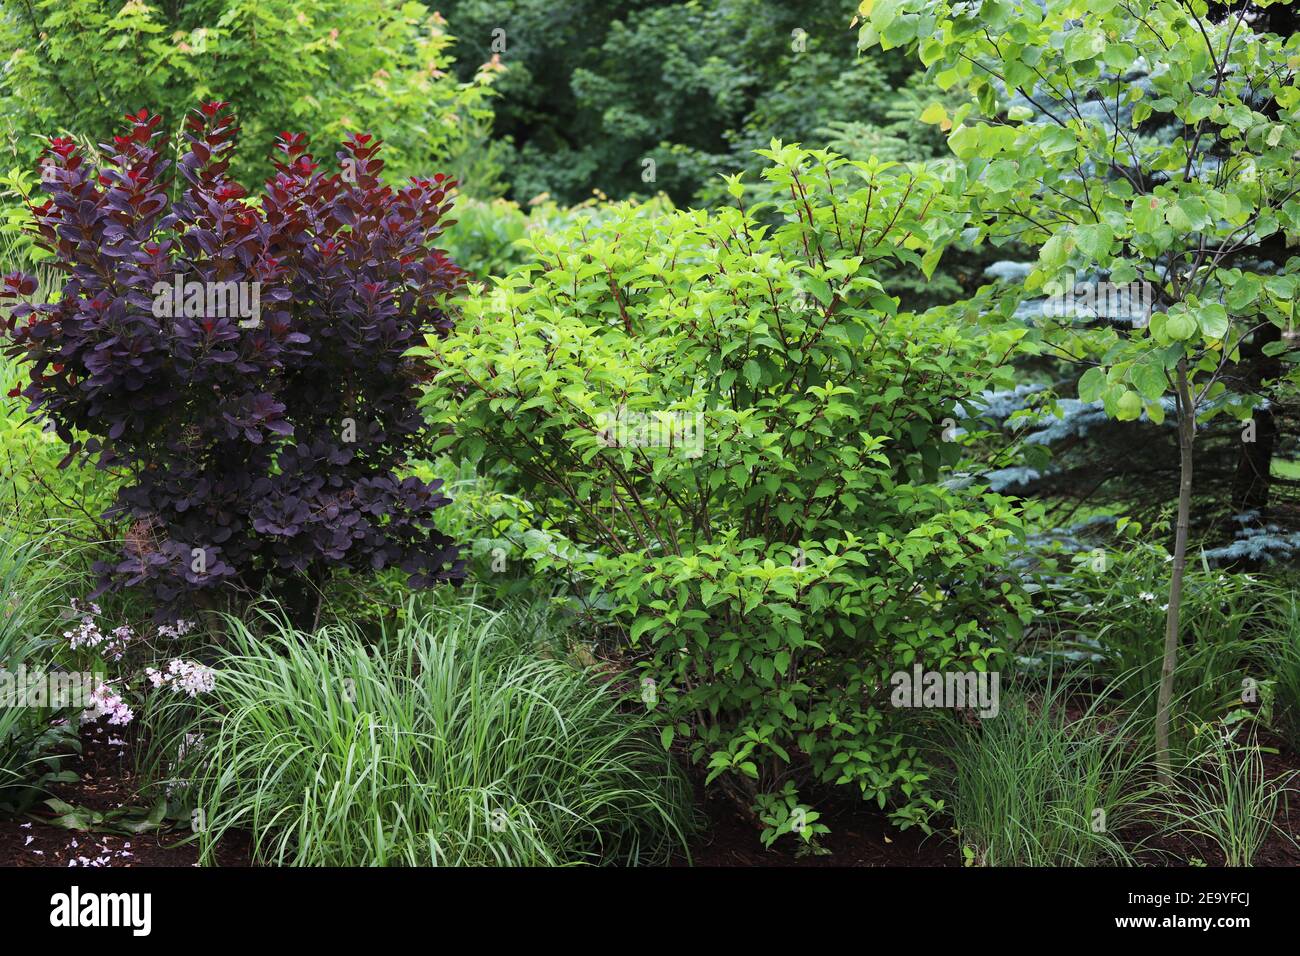 Cotinus coggygria 'Royal Purple', Smoke bush - a standout in the garden with beautiful dark purple foliage amidst 'Northwind' ornamental grass. Stock Photo